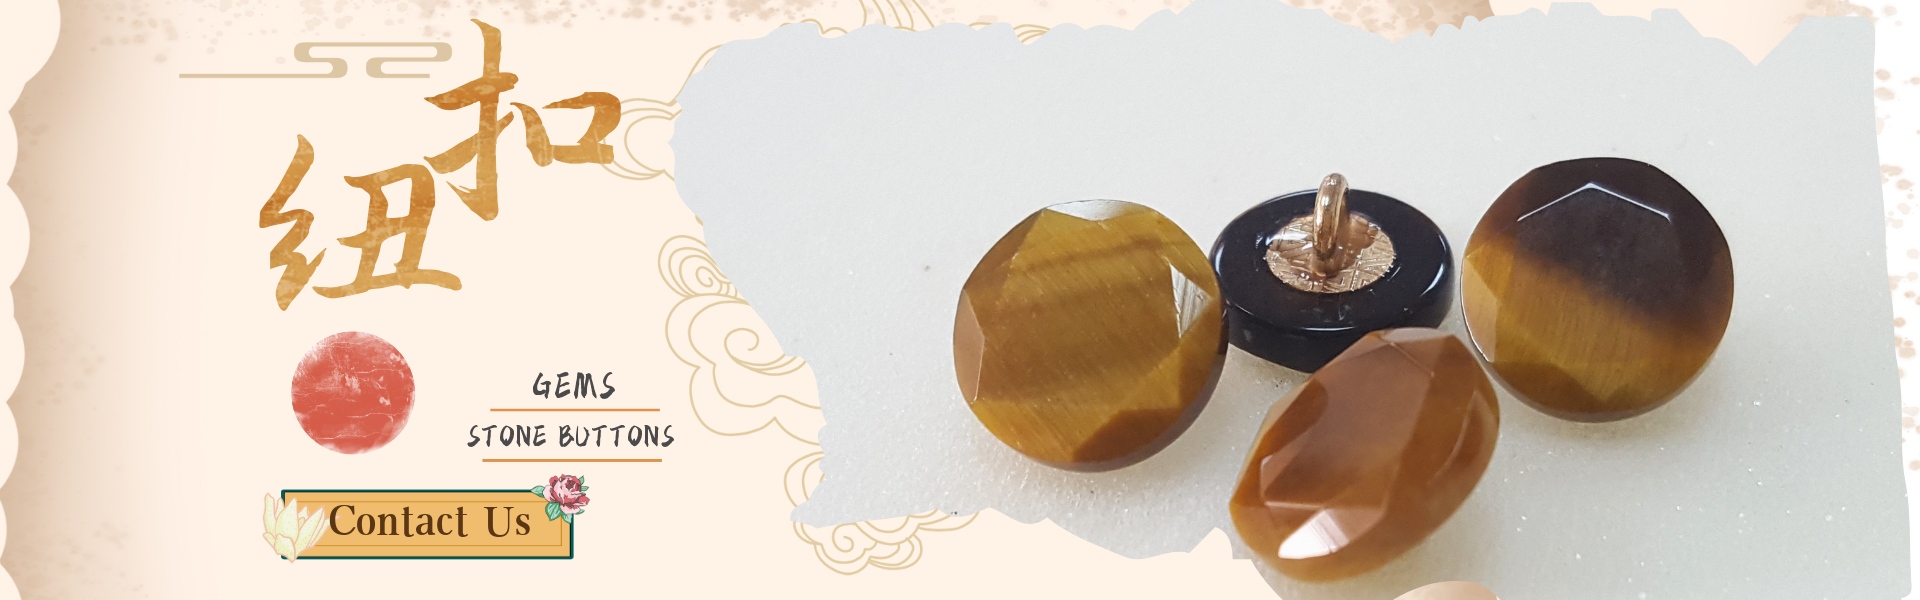 gems,stone buttons,jade,Dongguan ZIZO Arts and Crafts Co. LTD